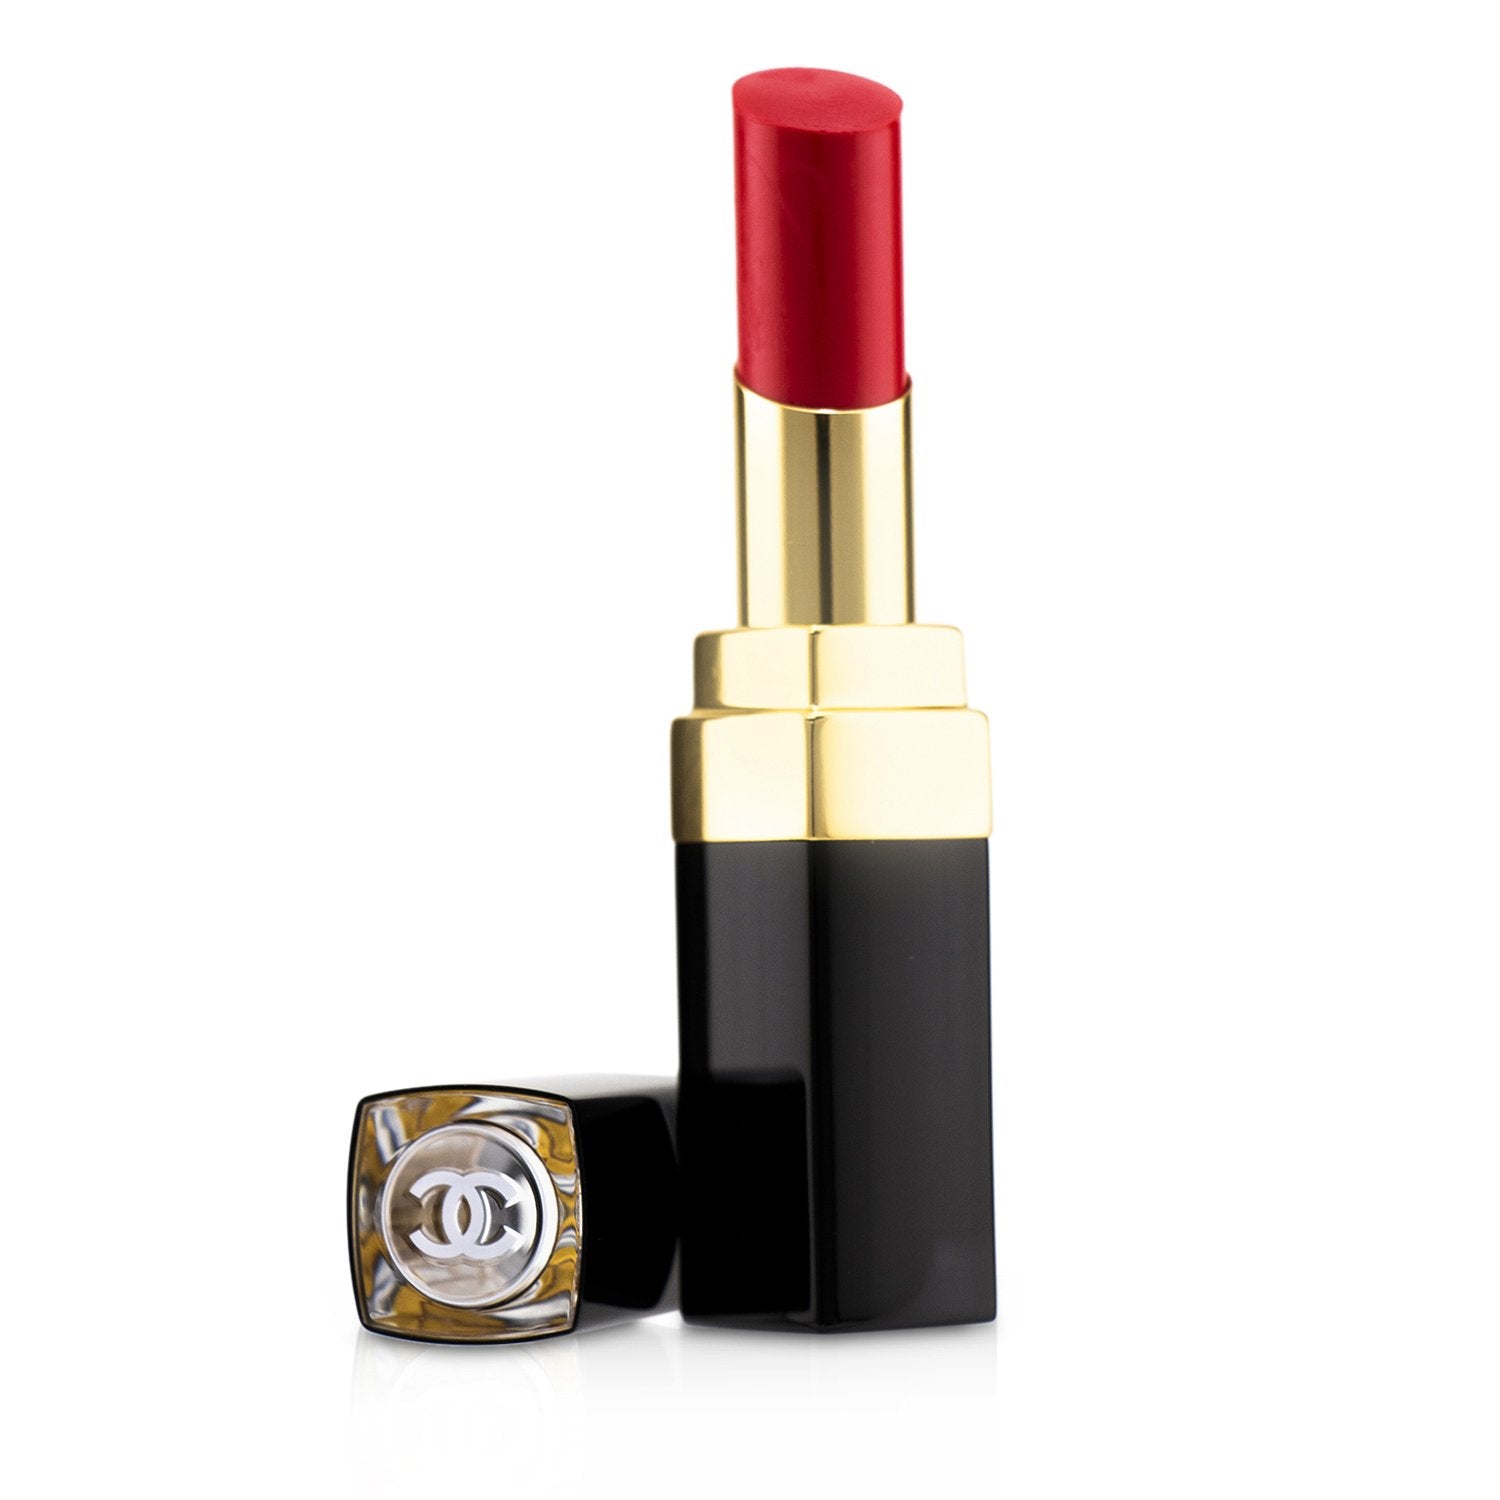 Chanel Rouge Coco Flash Hydrating Vibrant Shine Lip Colour - # 86 Furt –  Fresh Beauty Co. USA